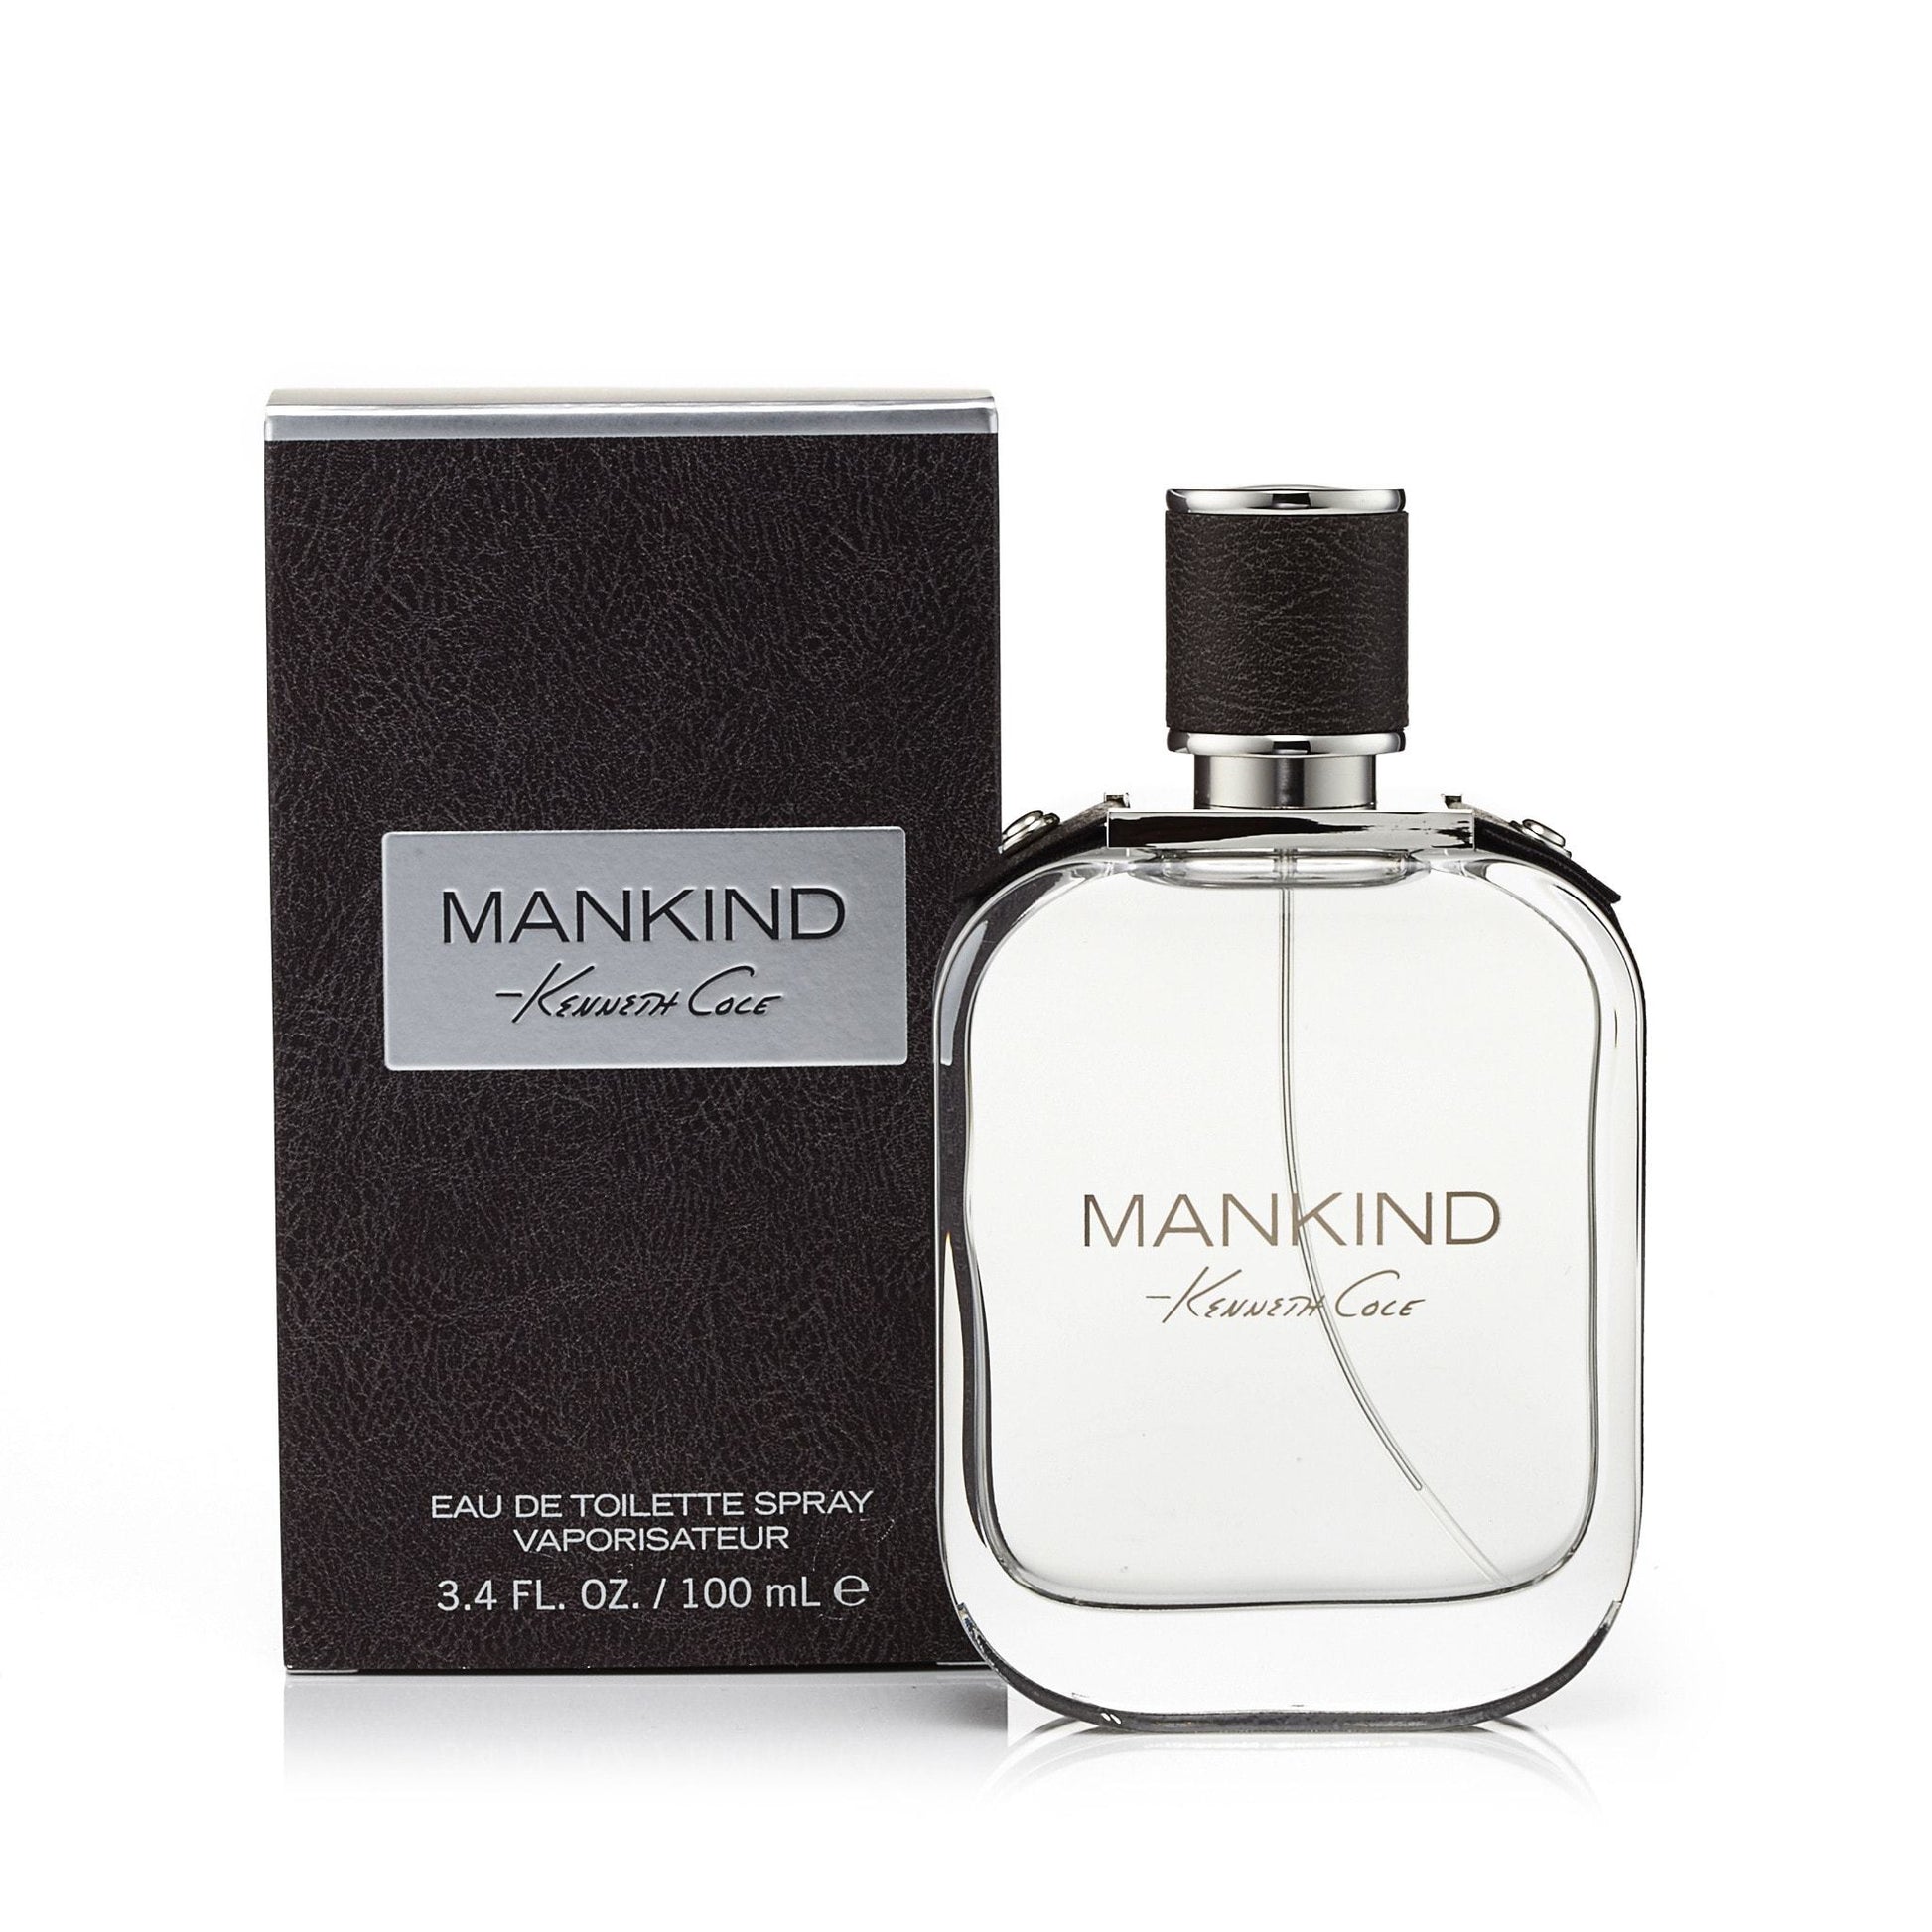 Mankind Eau de Toilette Spray for Men by Kenneth Cole, Product image 1